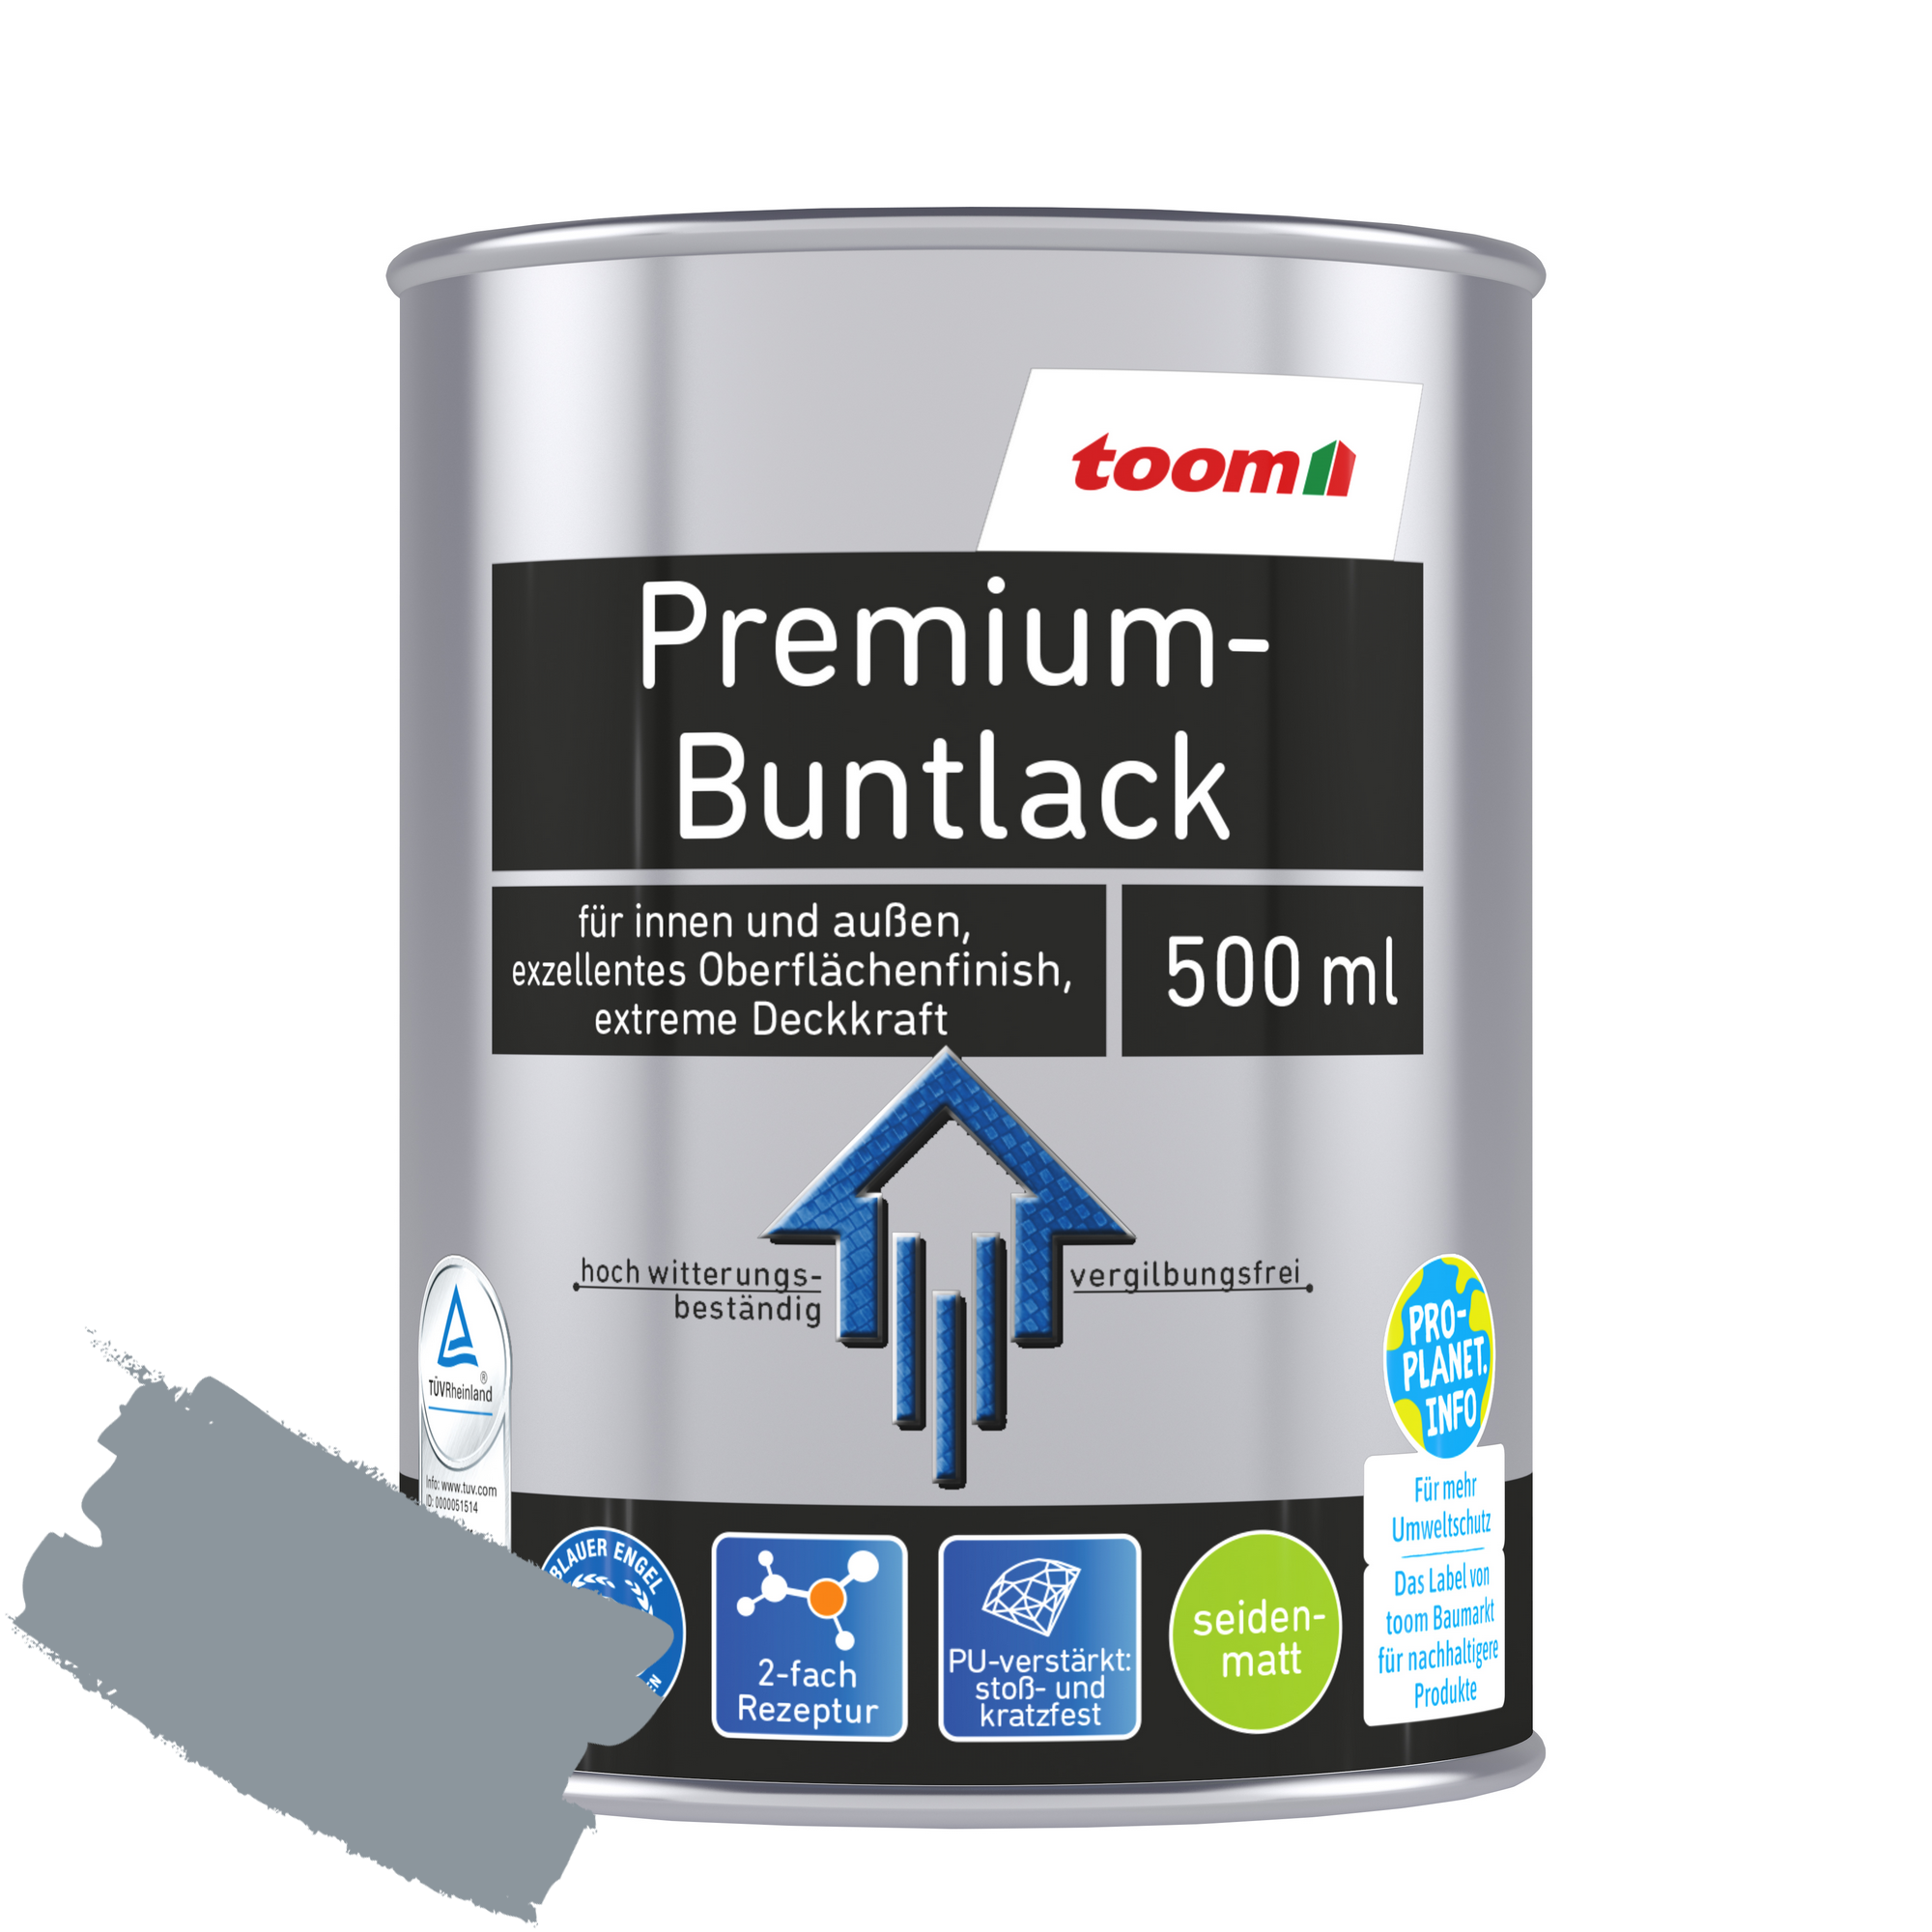 Premium-Buntlack silbergrau seidenmatt 500 ml + product picture